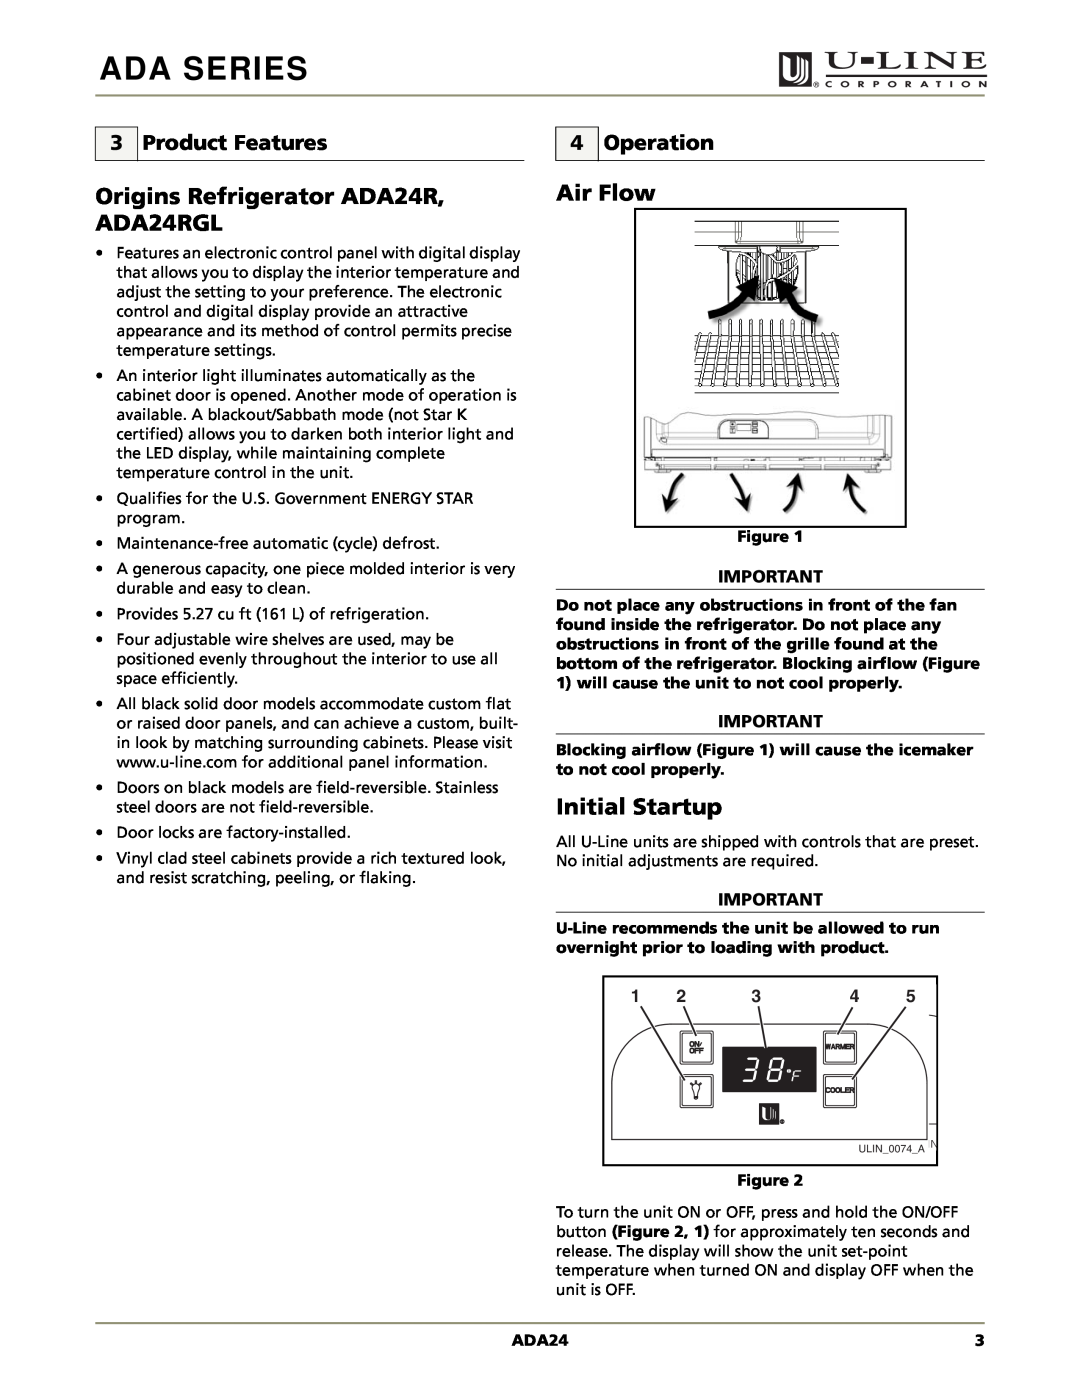 U-Line manual Origins Refrigerator ADA24R, ADA24RGL, Air Flow, Initial Startup, Product Features, Operation, Ada Series 